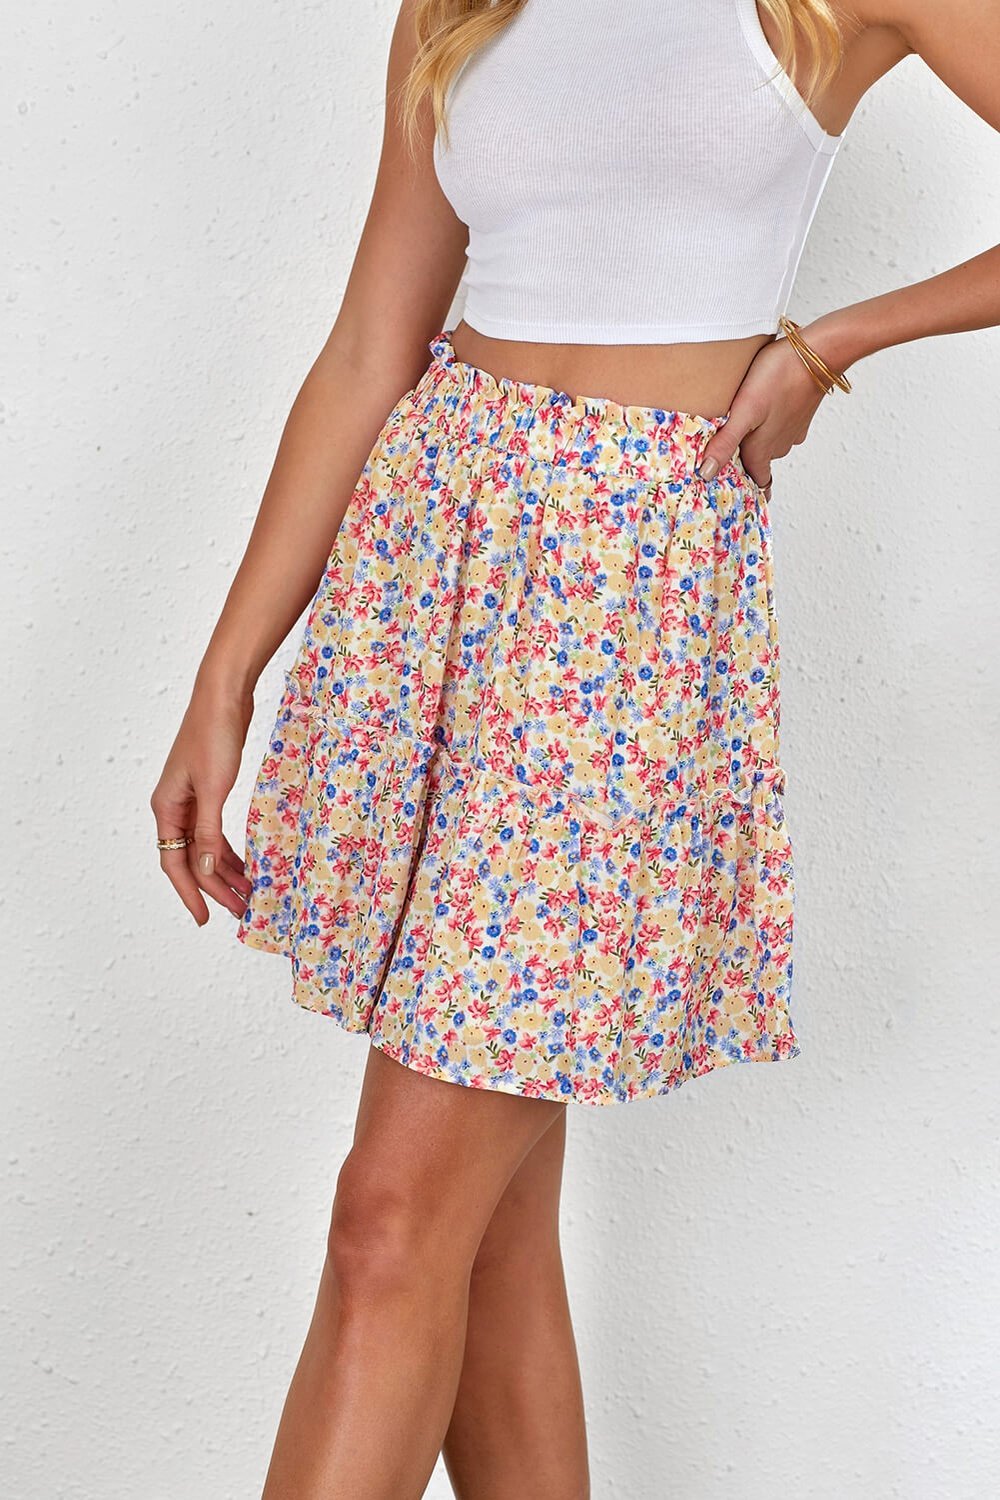 Floral Print Elastic Waist Skirt - Skirts - FITGGINS